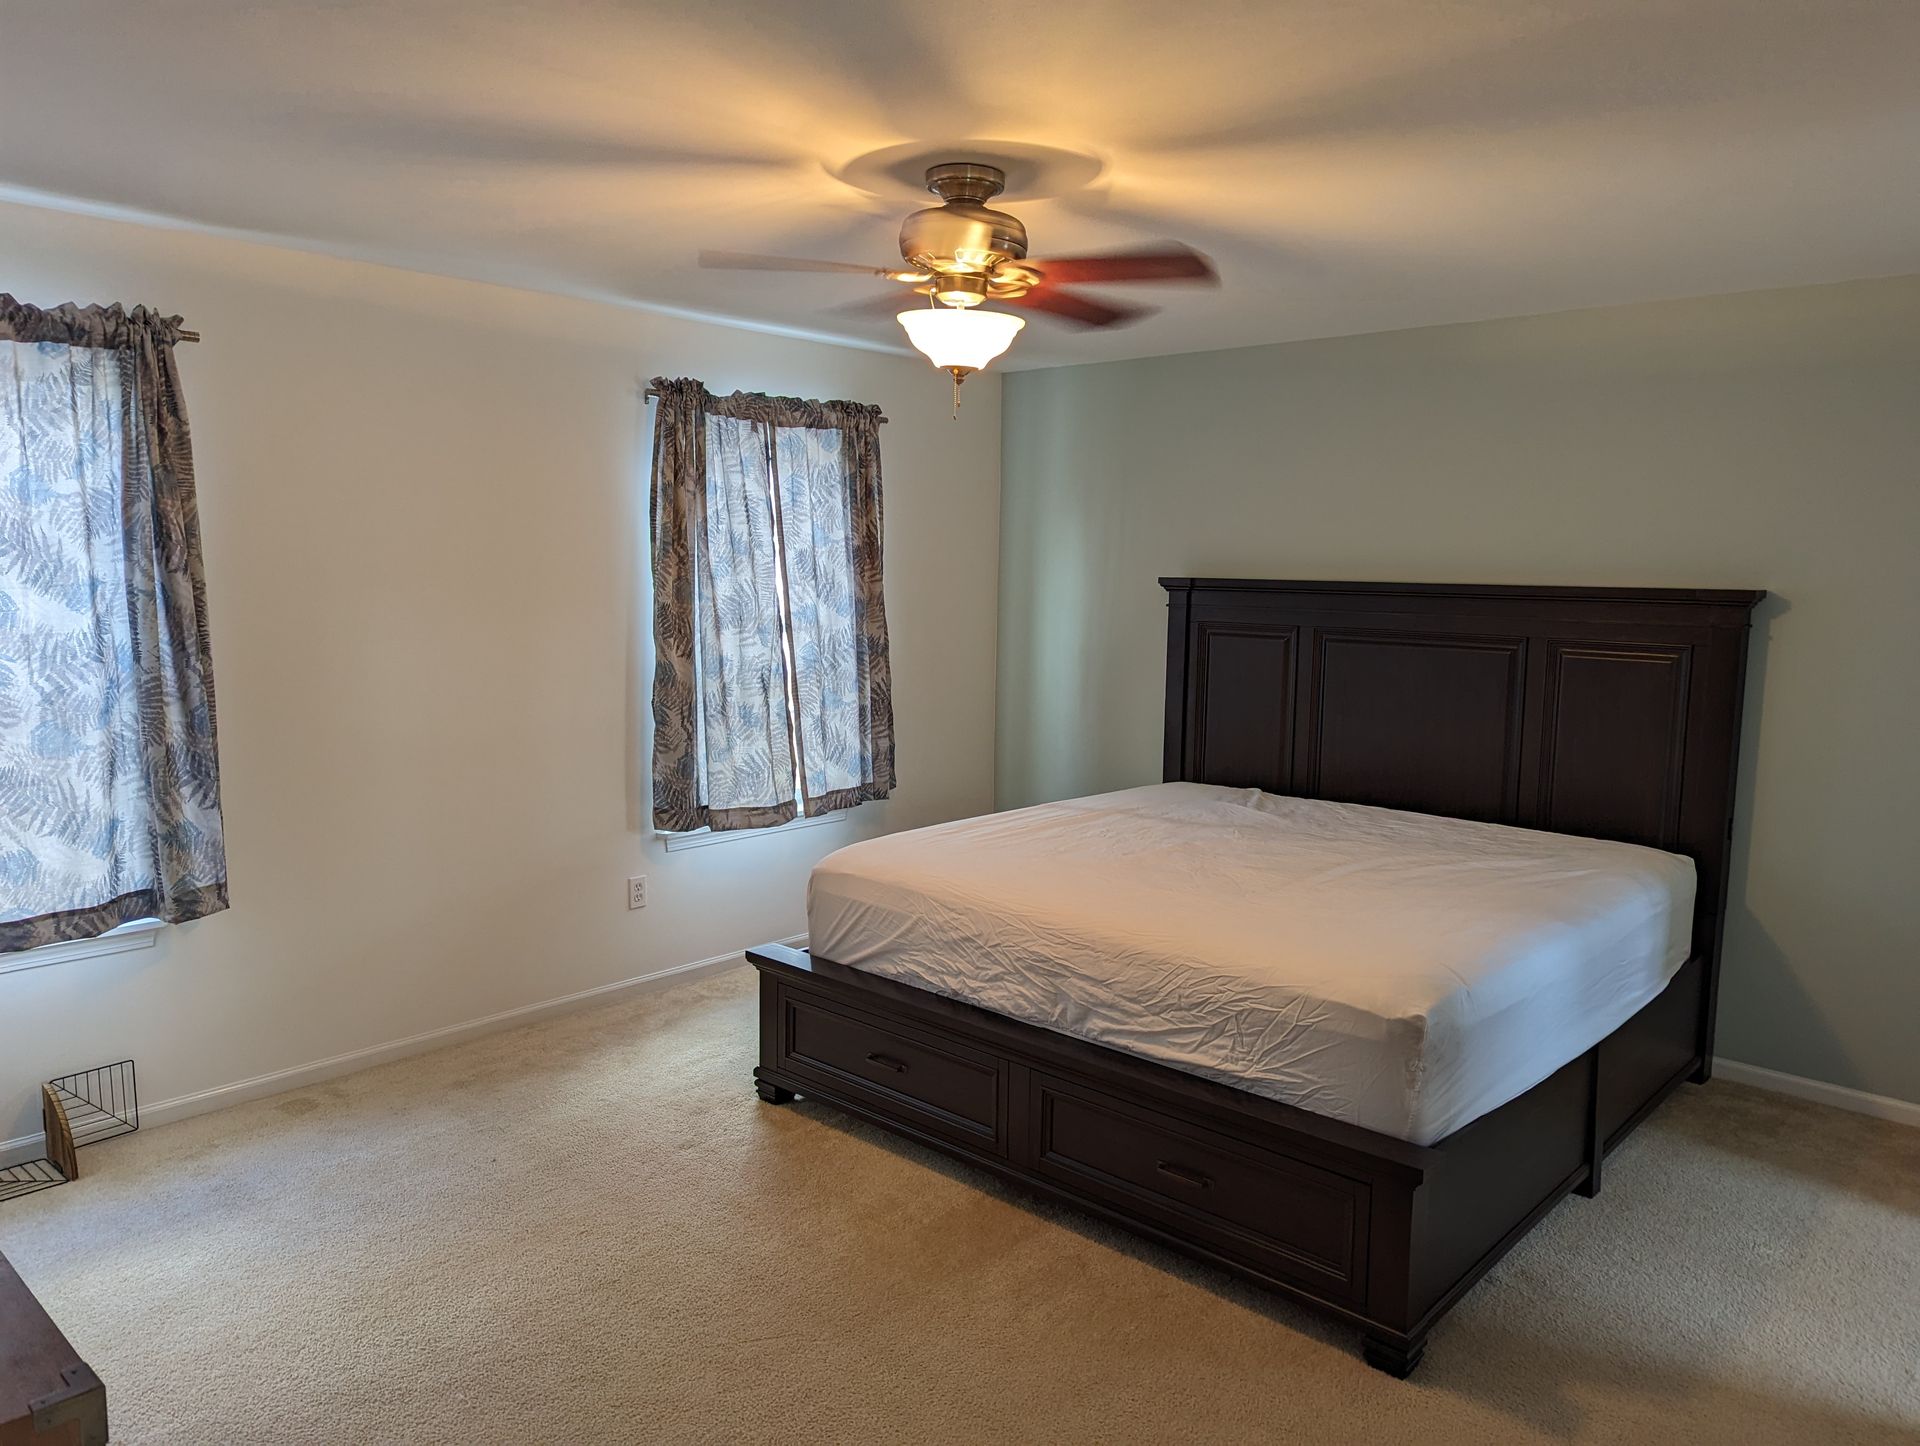 Bedroom After — Bayside, WI — The Village Painter LLC